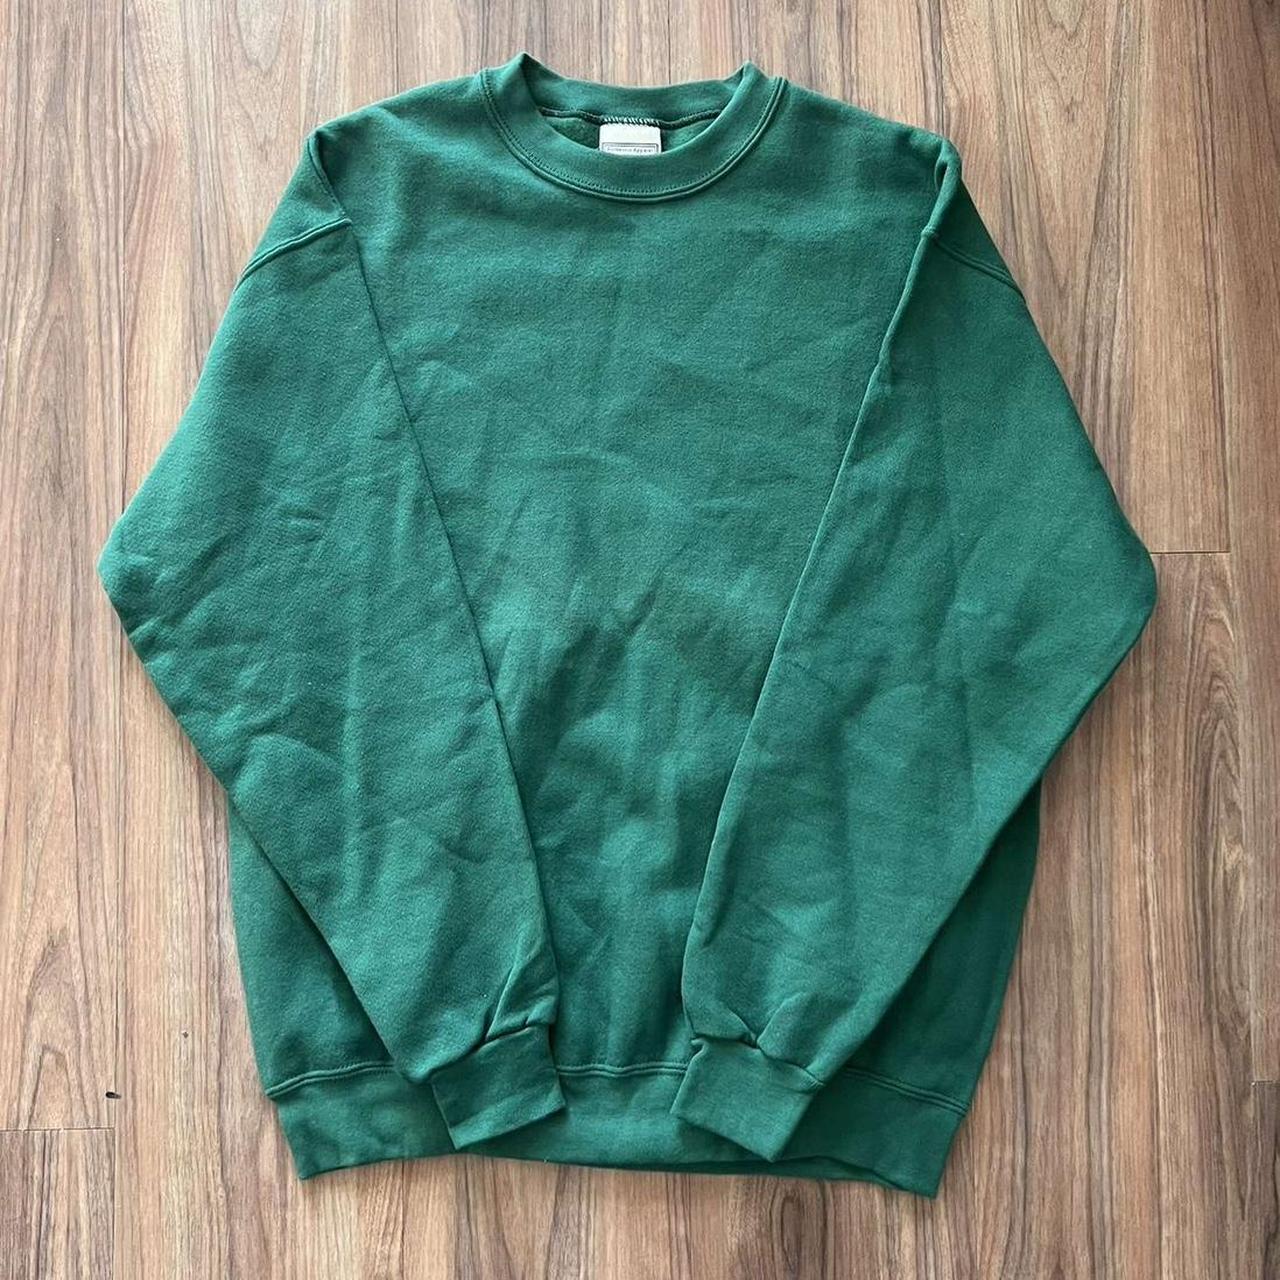 Green Lee blank crewneck sweatshirt... - Depop